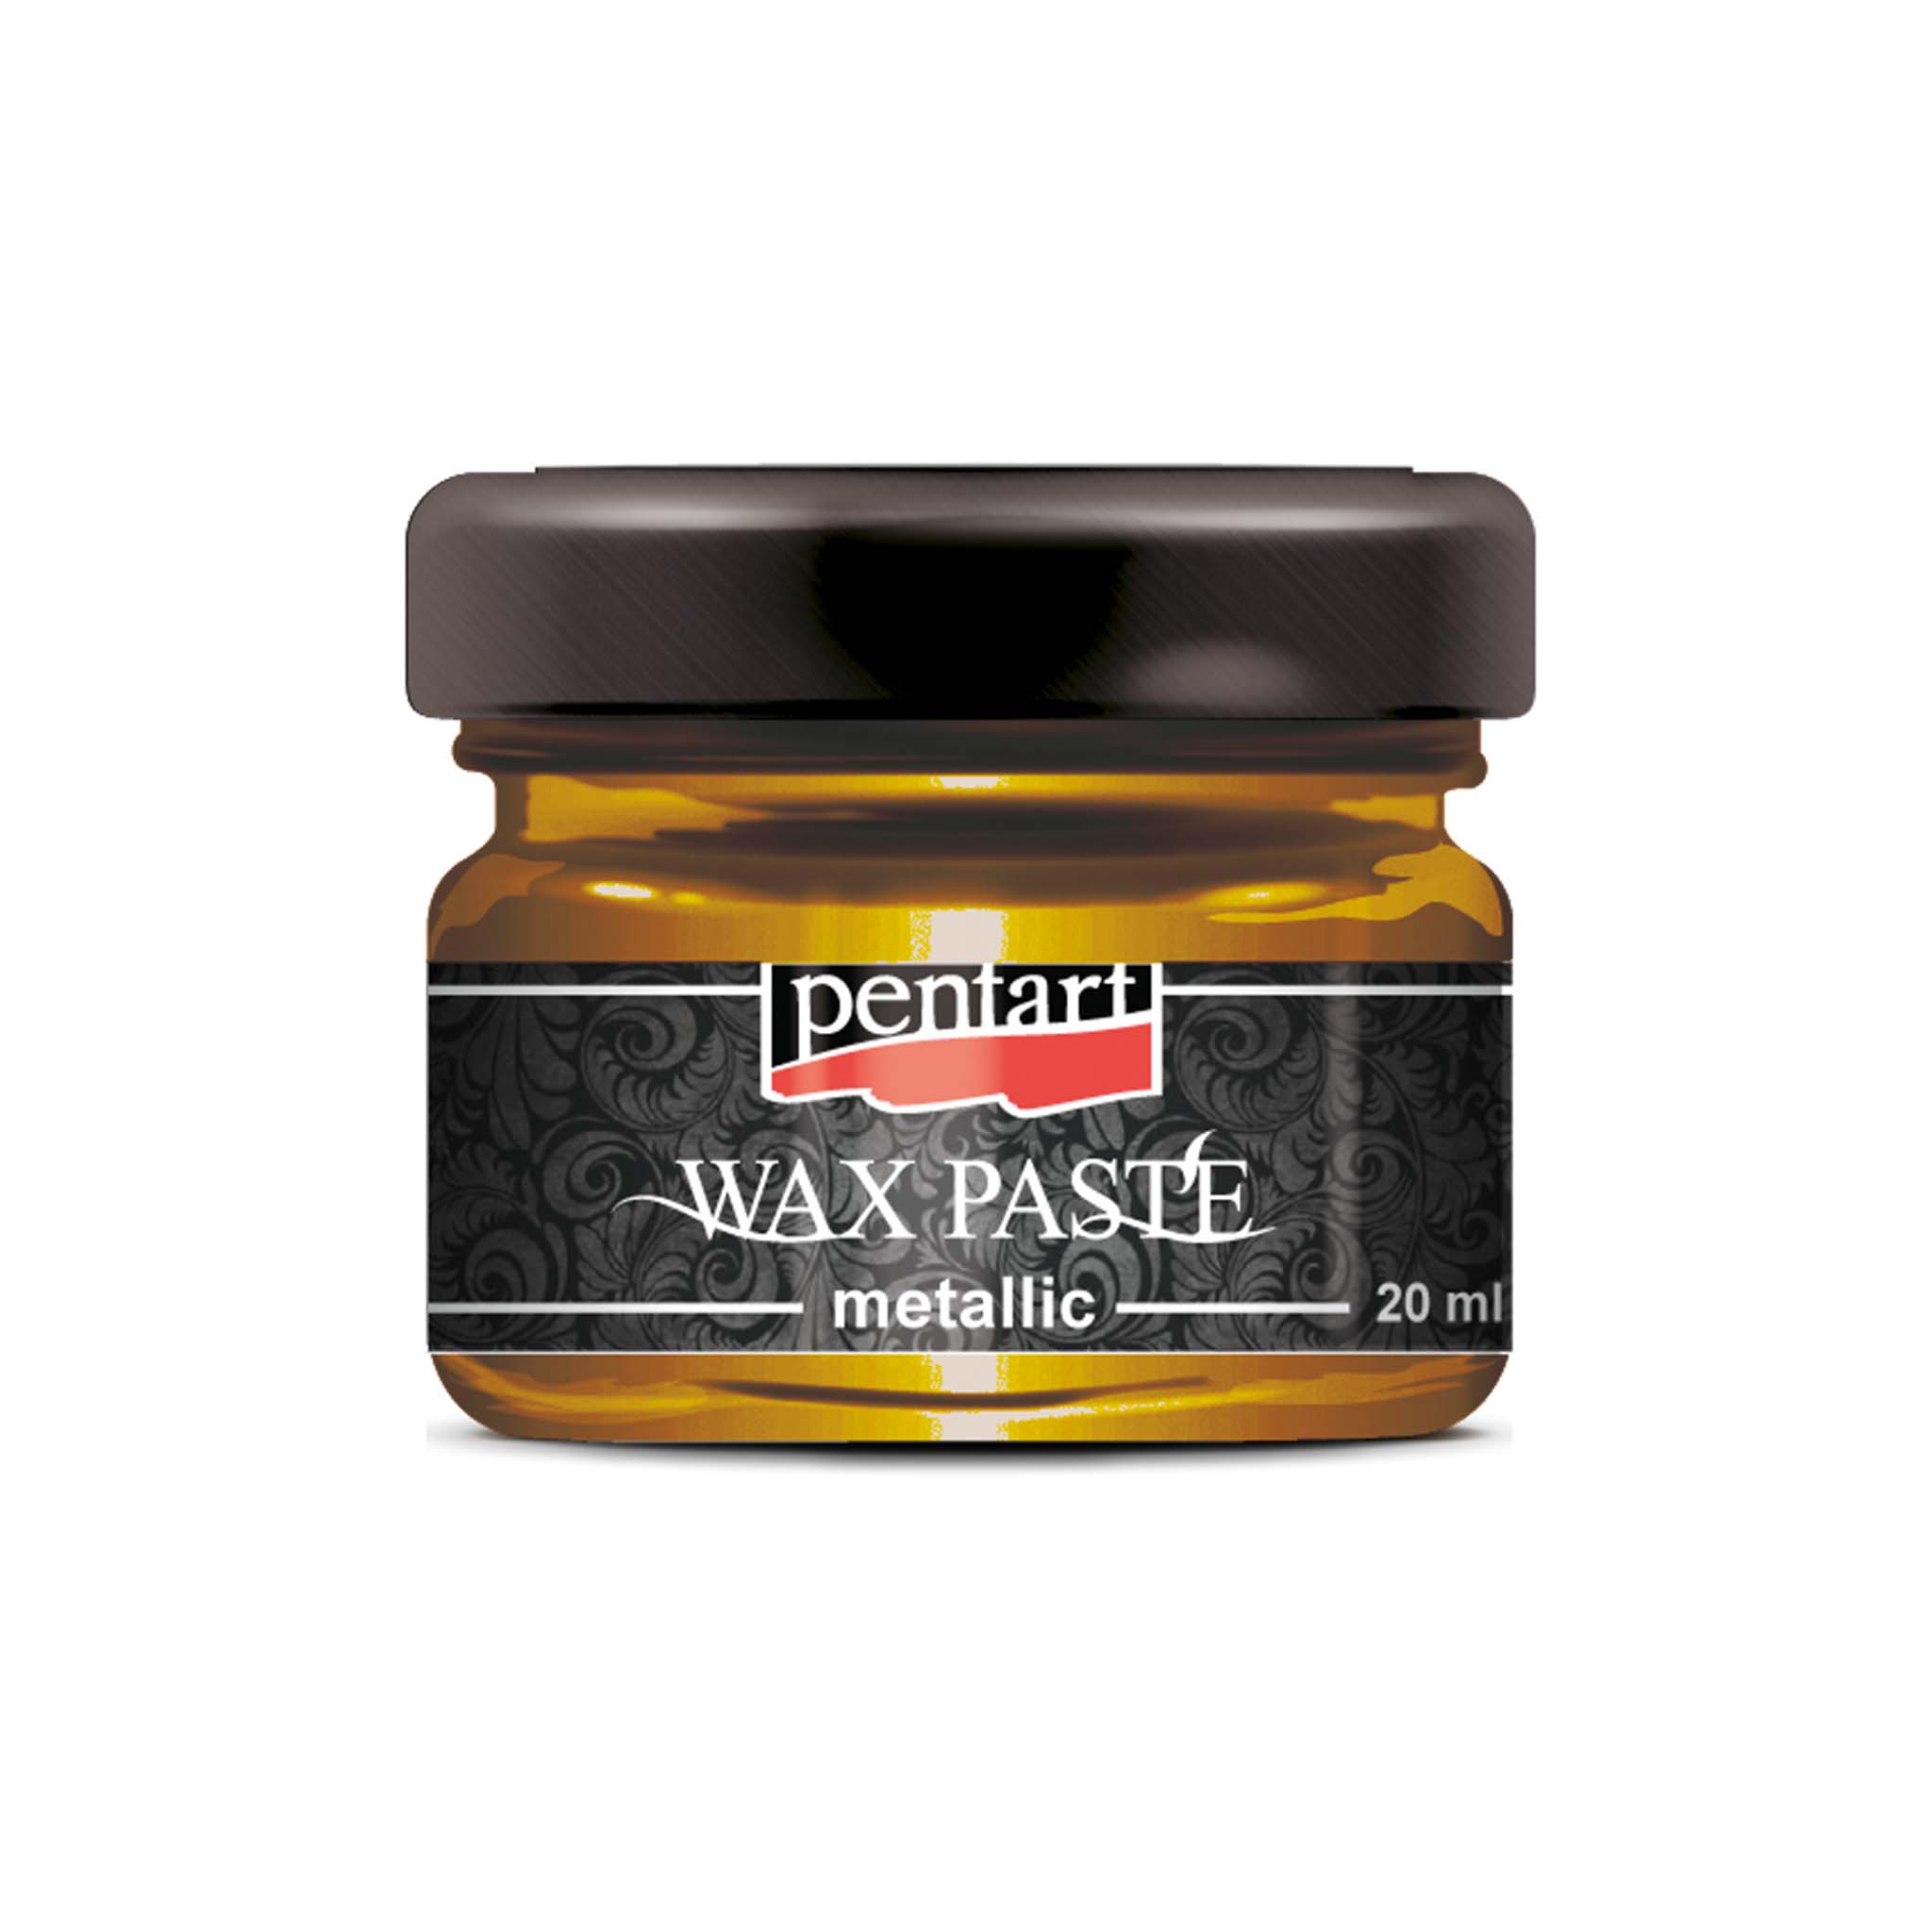 A jar of wax paste by Pentart.